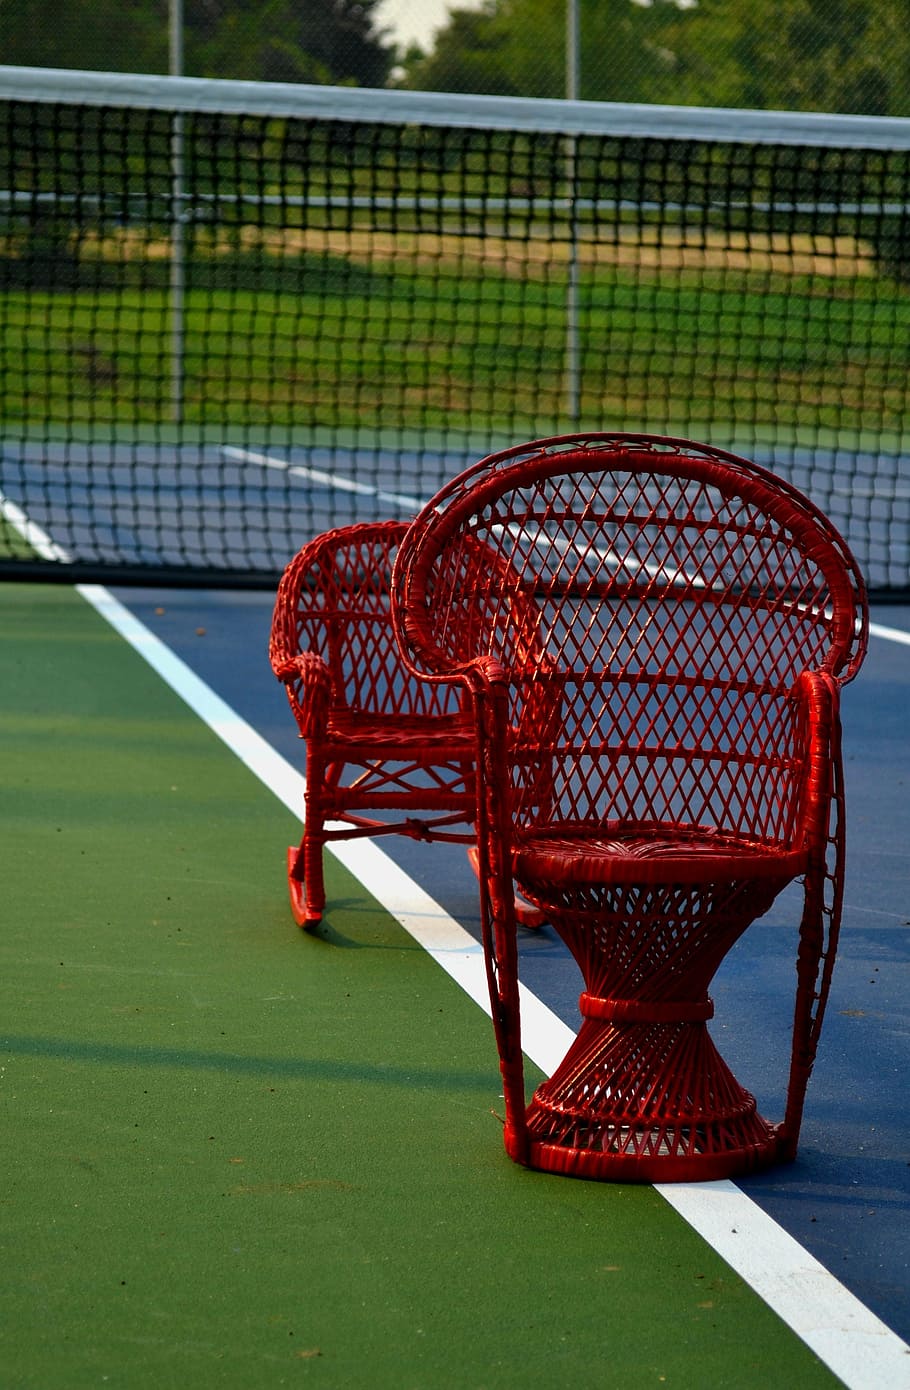 tennis, red, chair, court, match, sport, outdoors, racket, no People, net - sports equipment